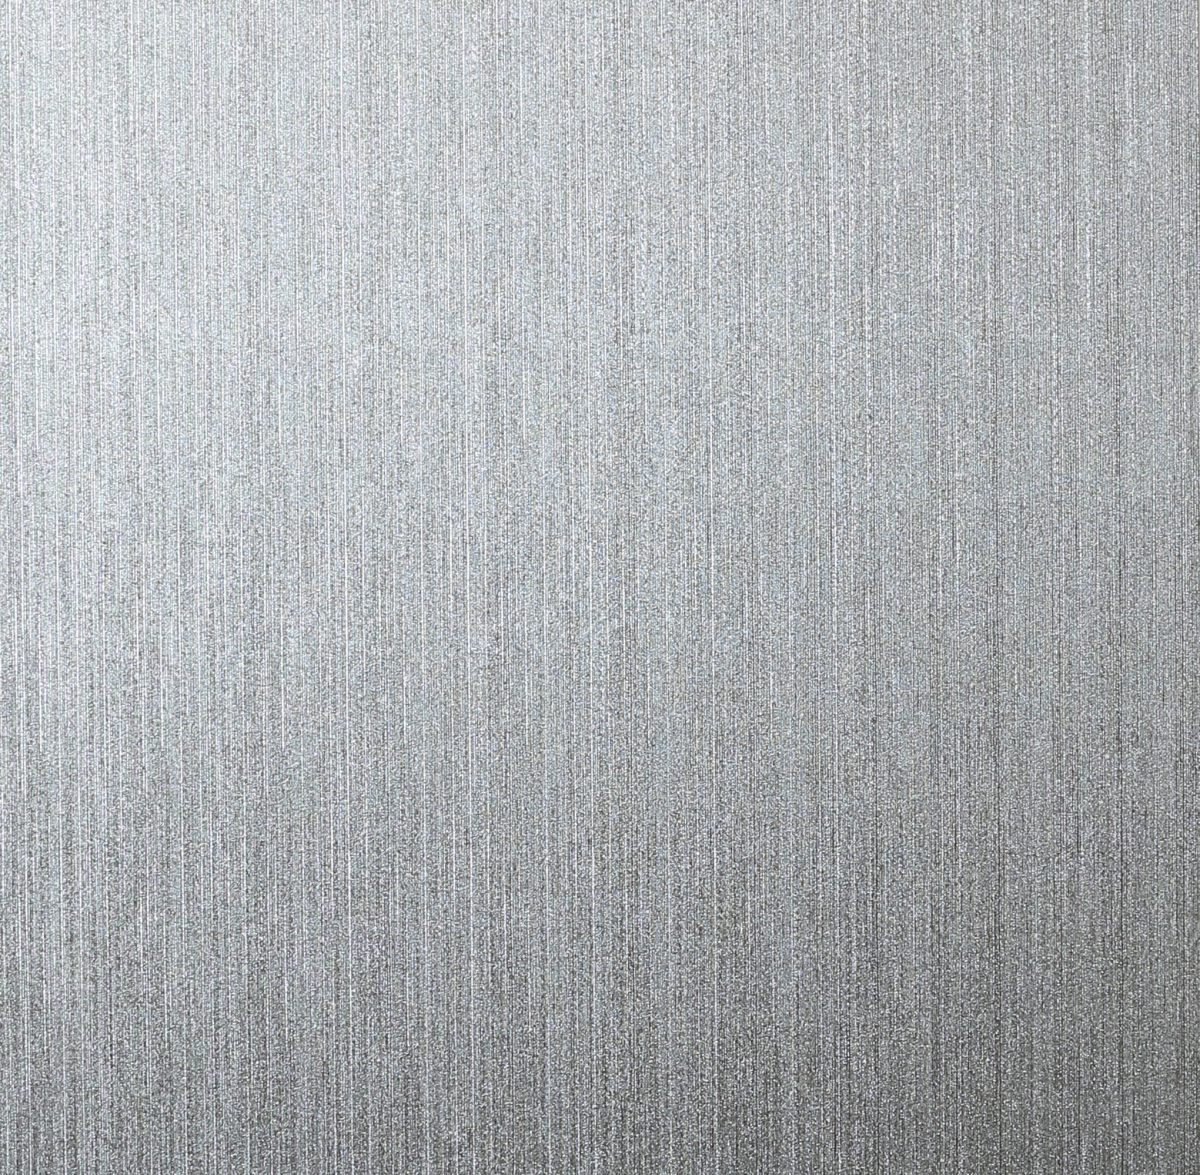 906803 Gianni Plain Foil Vinyl Wallpaper, Silver